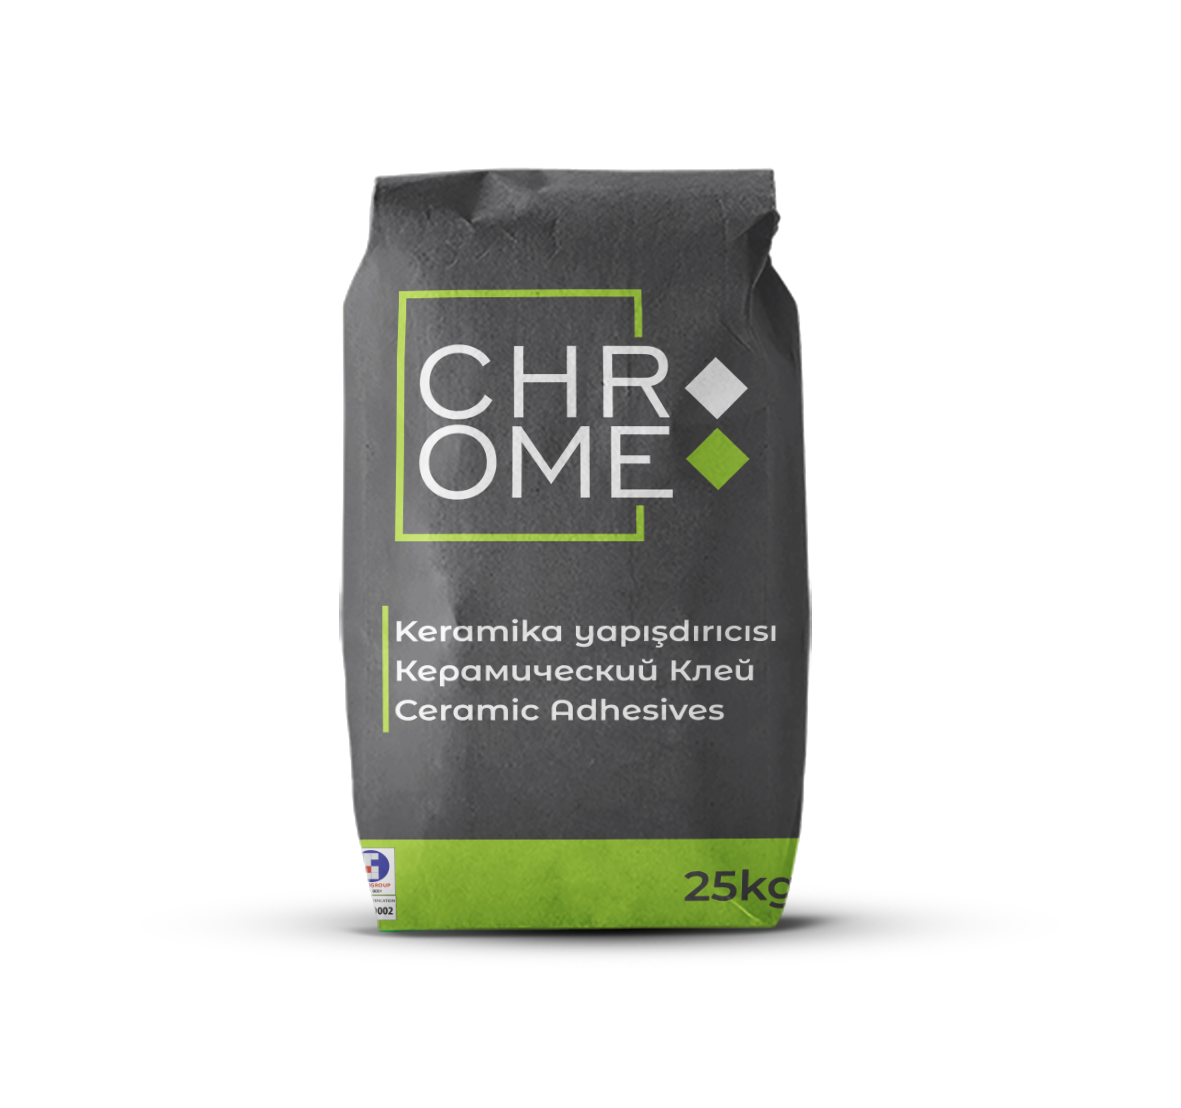 "CHROME" Ceramic Adhesives